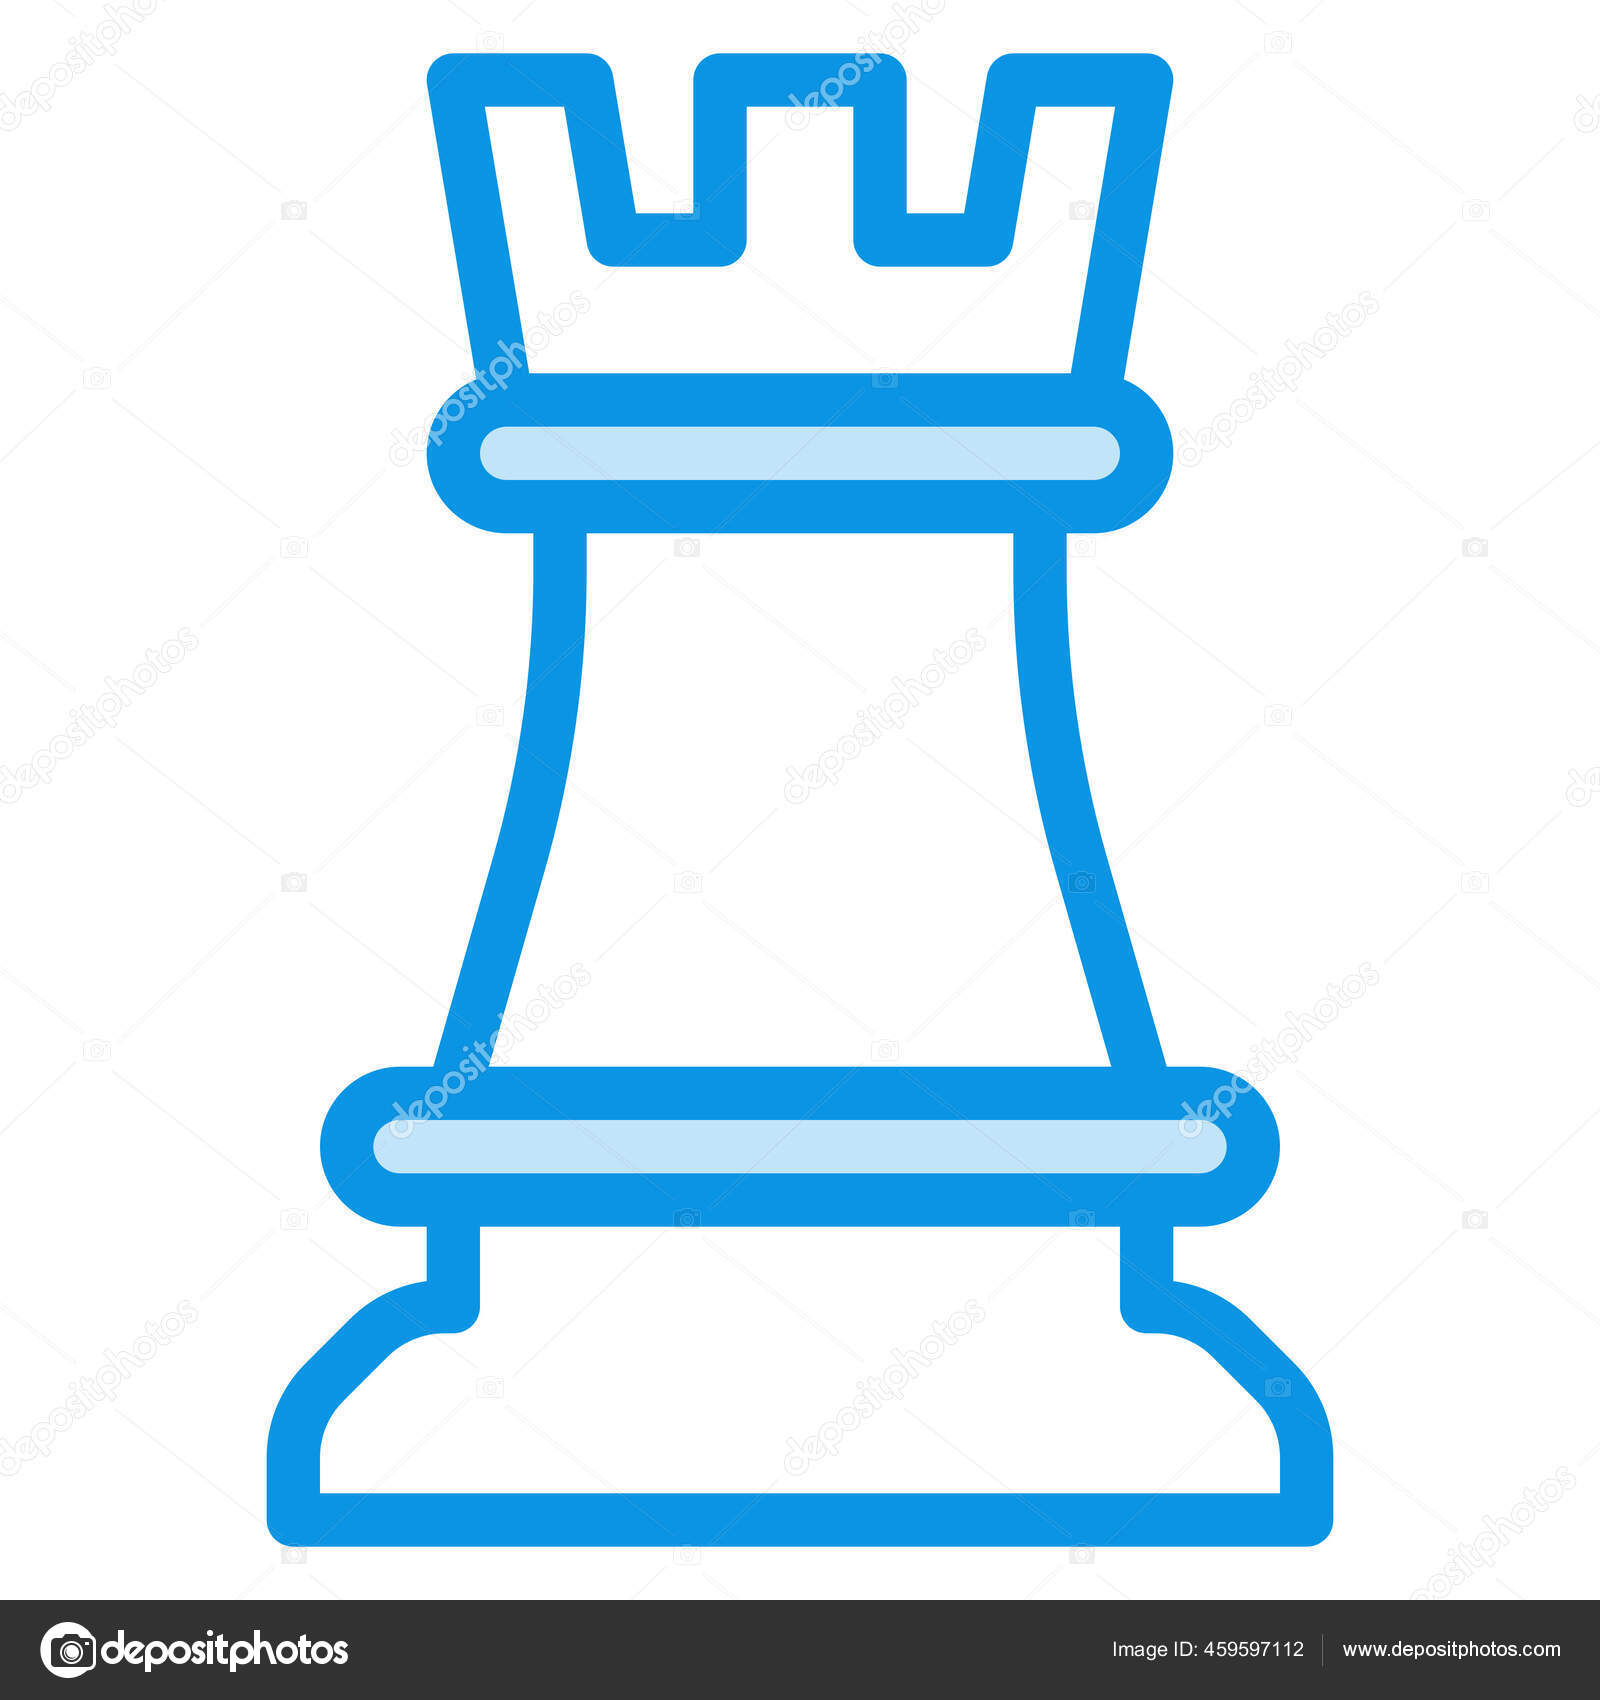 Icon o Gambito da rainha